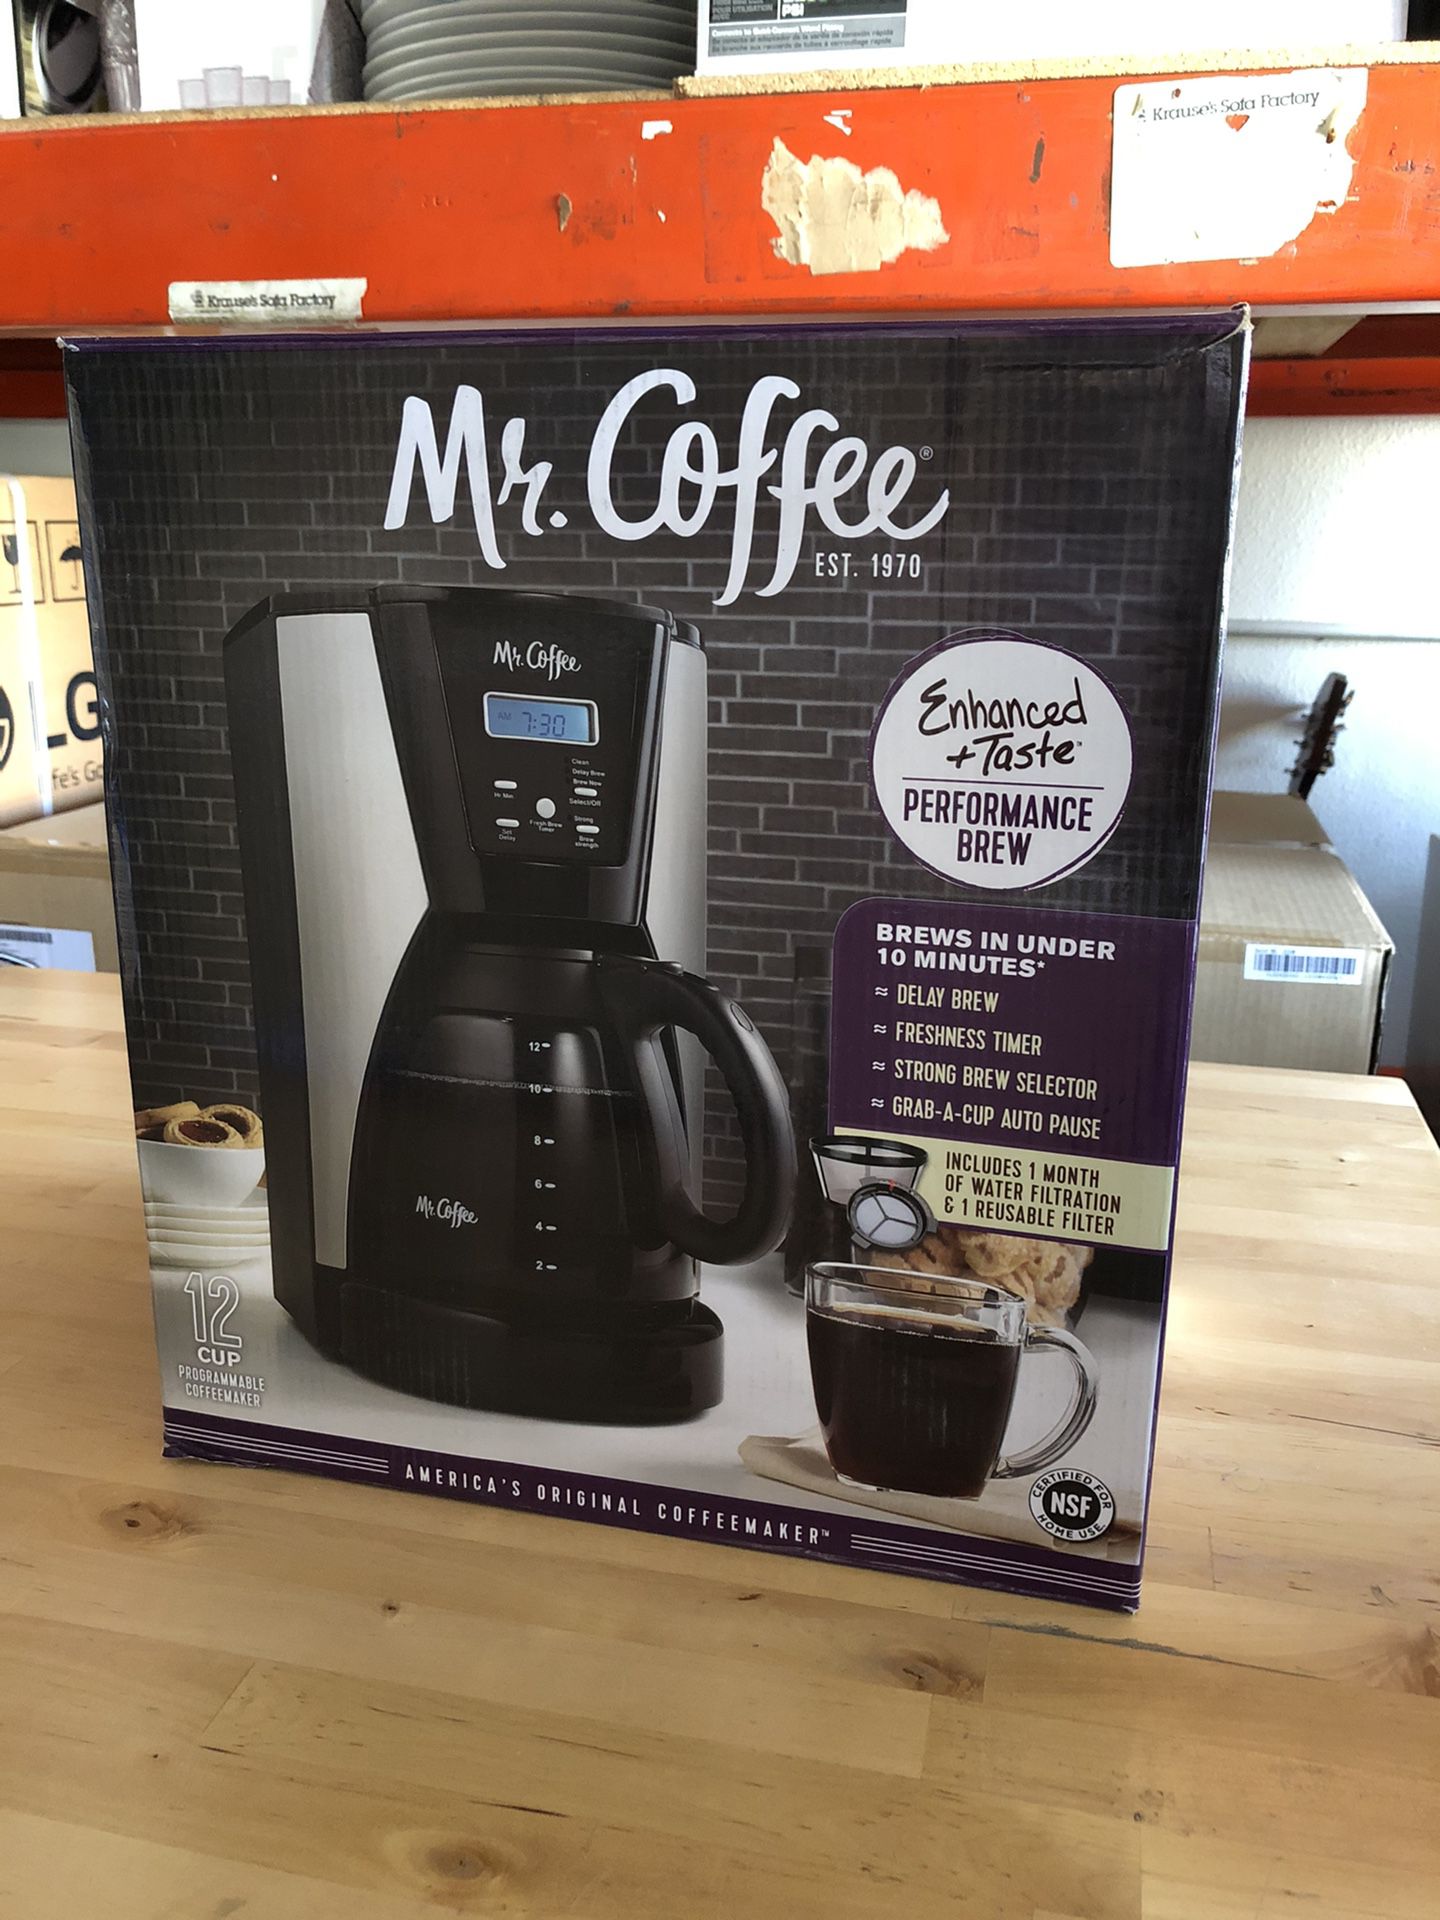 New Mr. Coffee $26